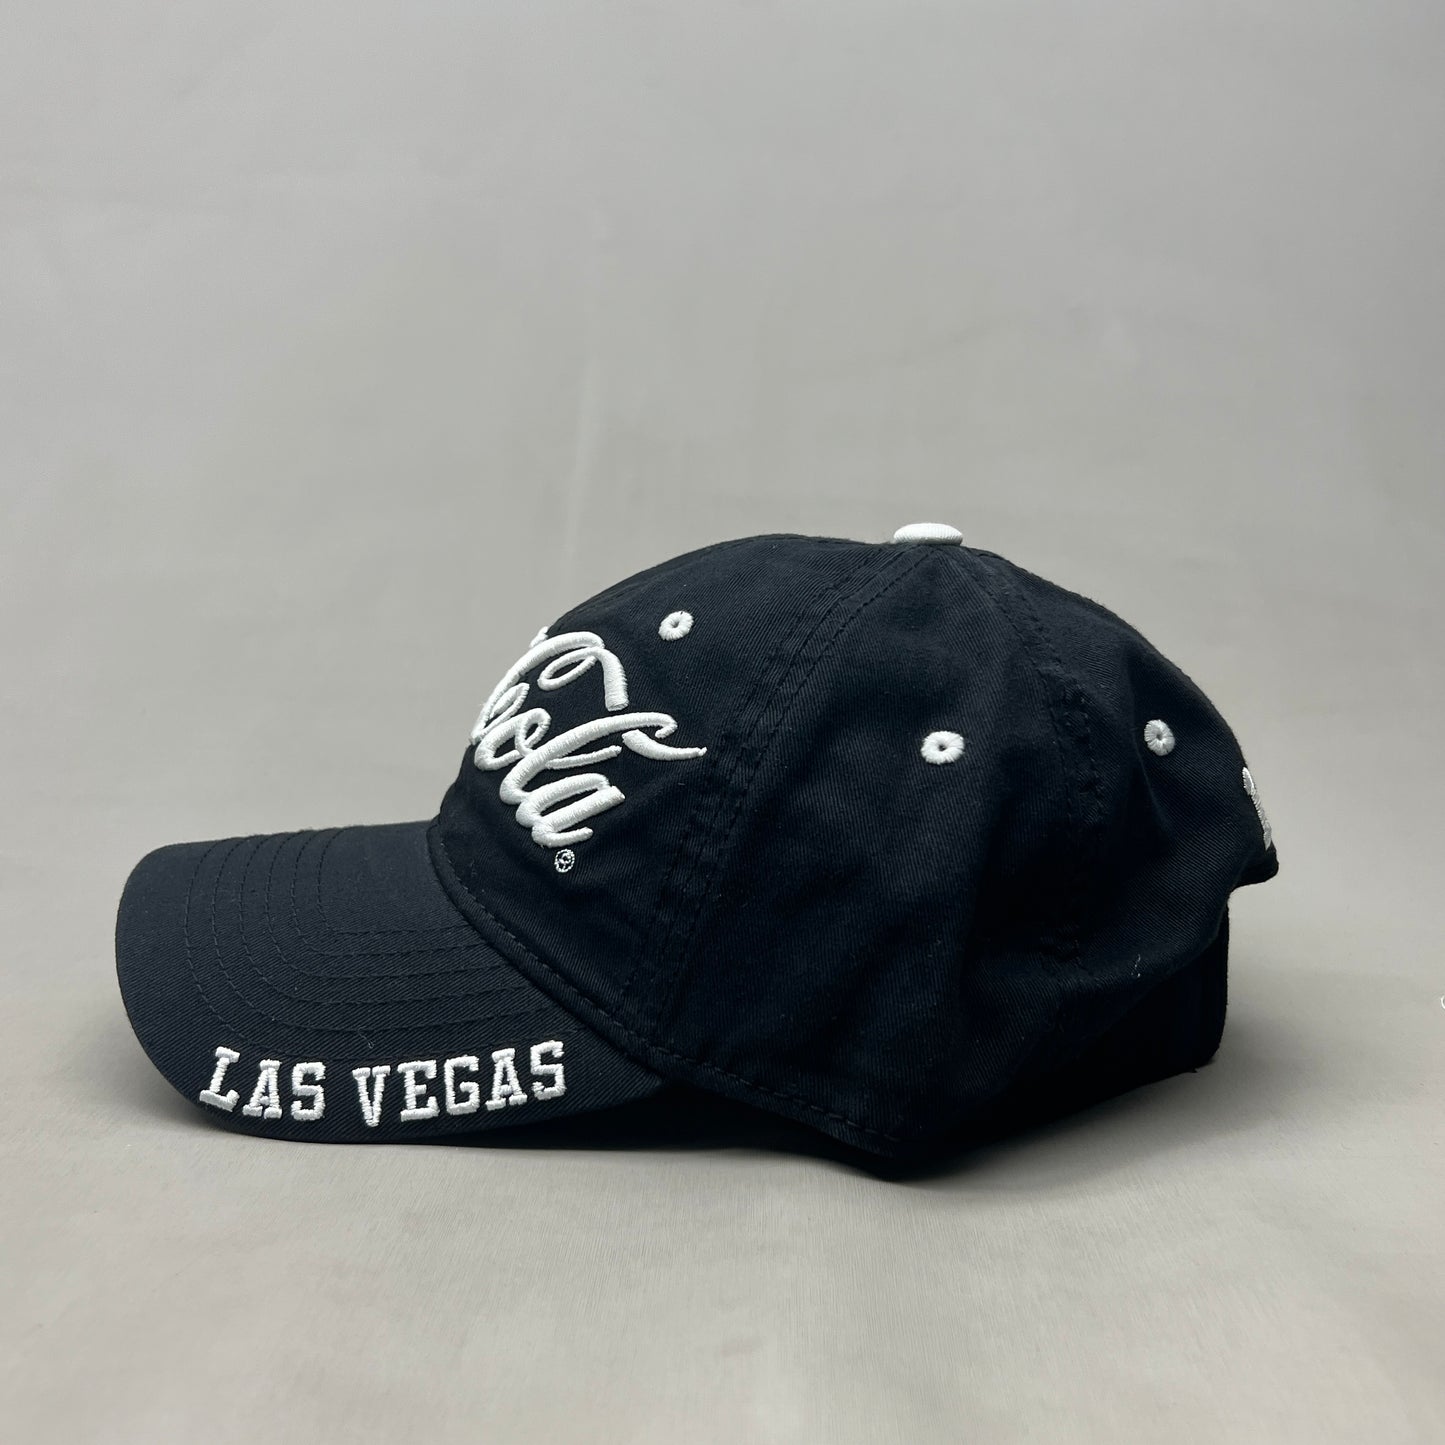 COCA-COLA Las Vegas 1886 Black Script Baseball Cap Fit Sz One Size Black 23633 (New)